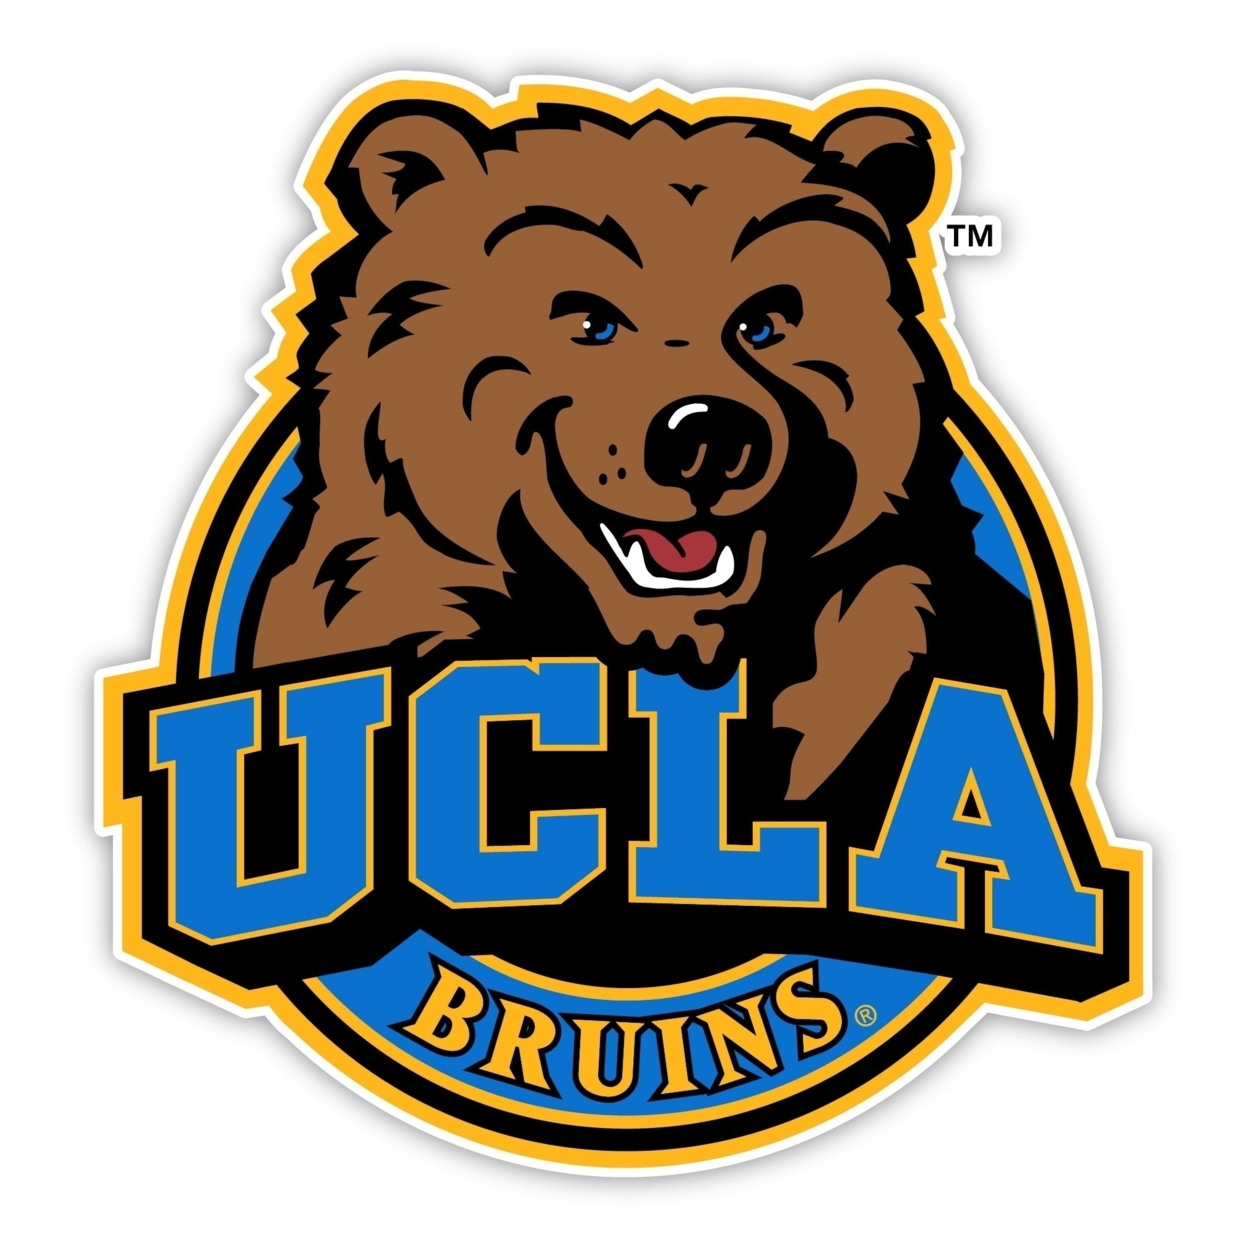 UCLA Bruins 2 Inch Vinyl Mascot Decal Sticker - 1, 6-Inch